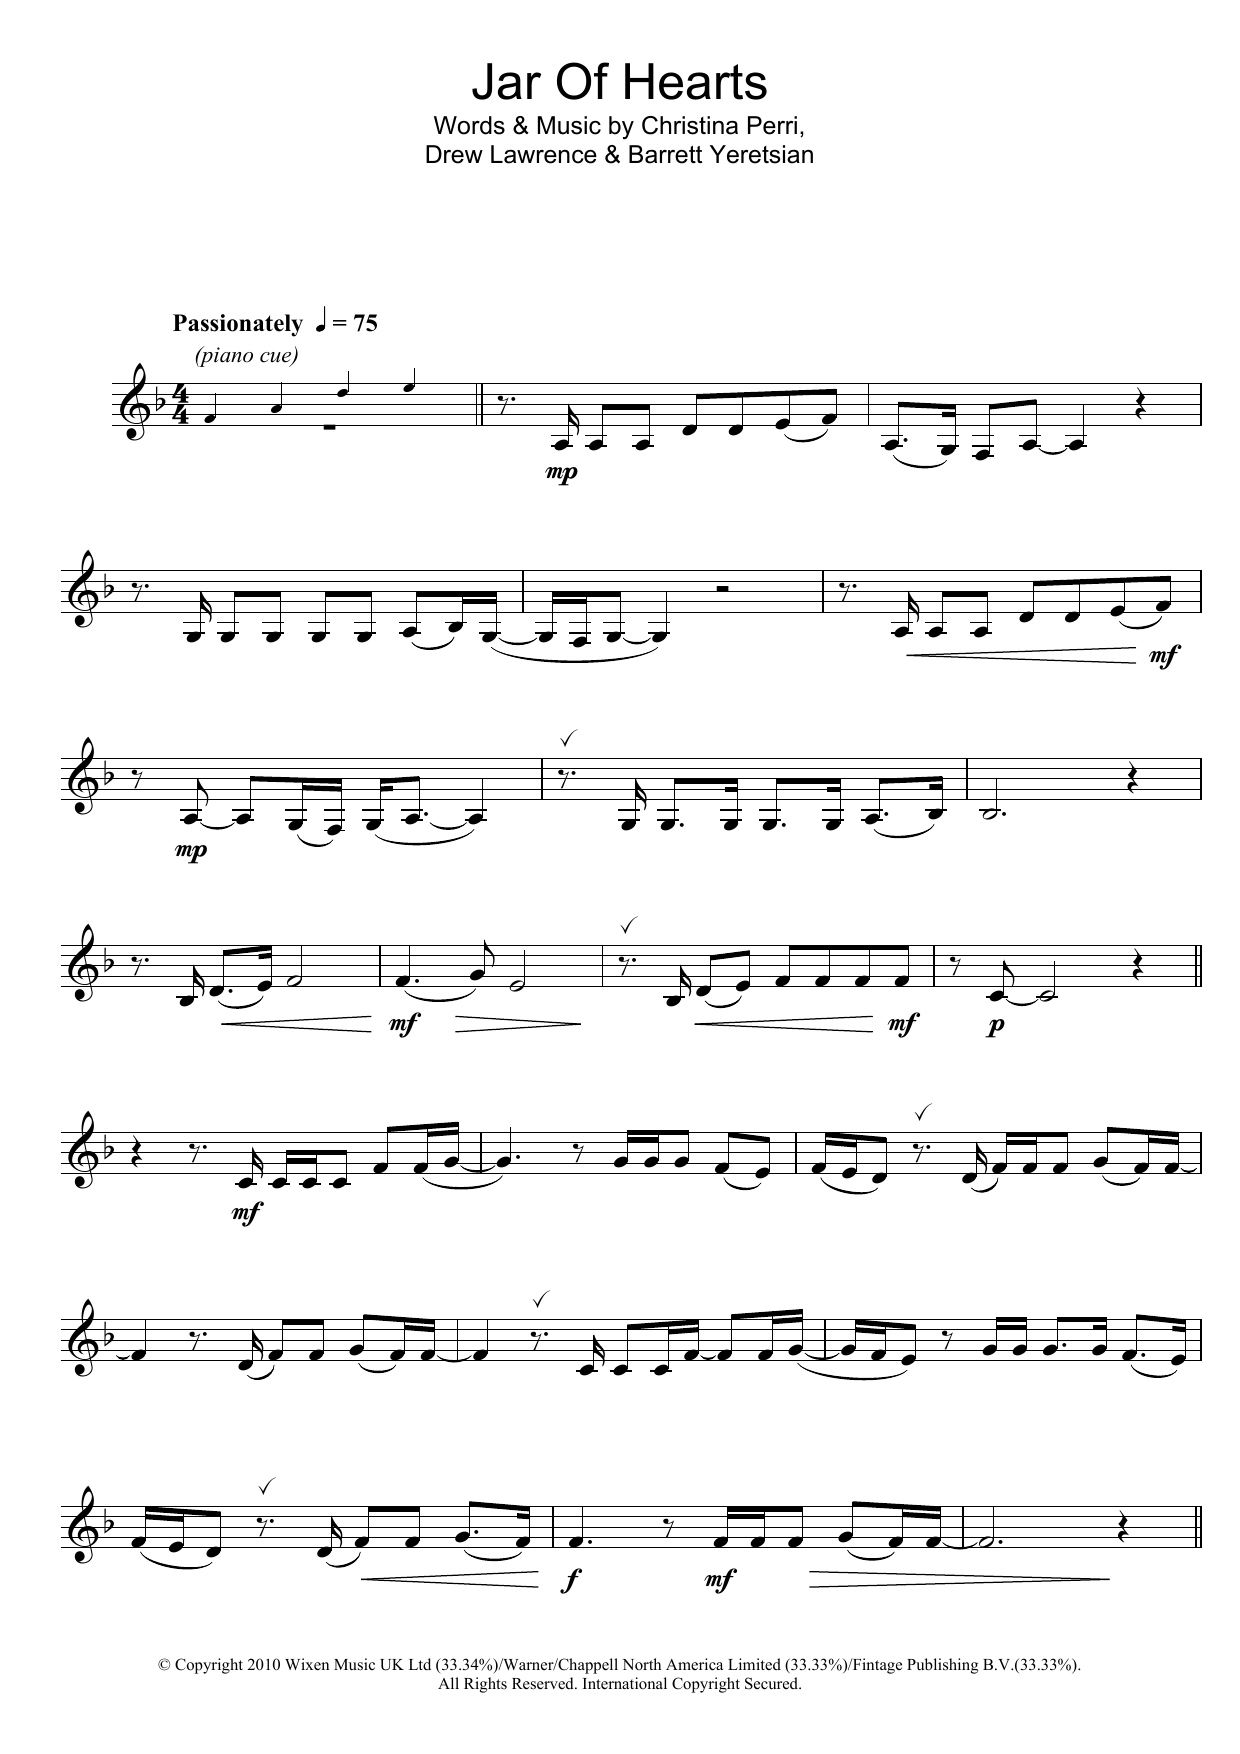 Jar Of Hearts Chords Sheet Music Digital Files To Print Licensed Barrett Yeretsian